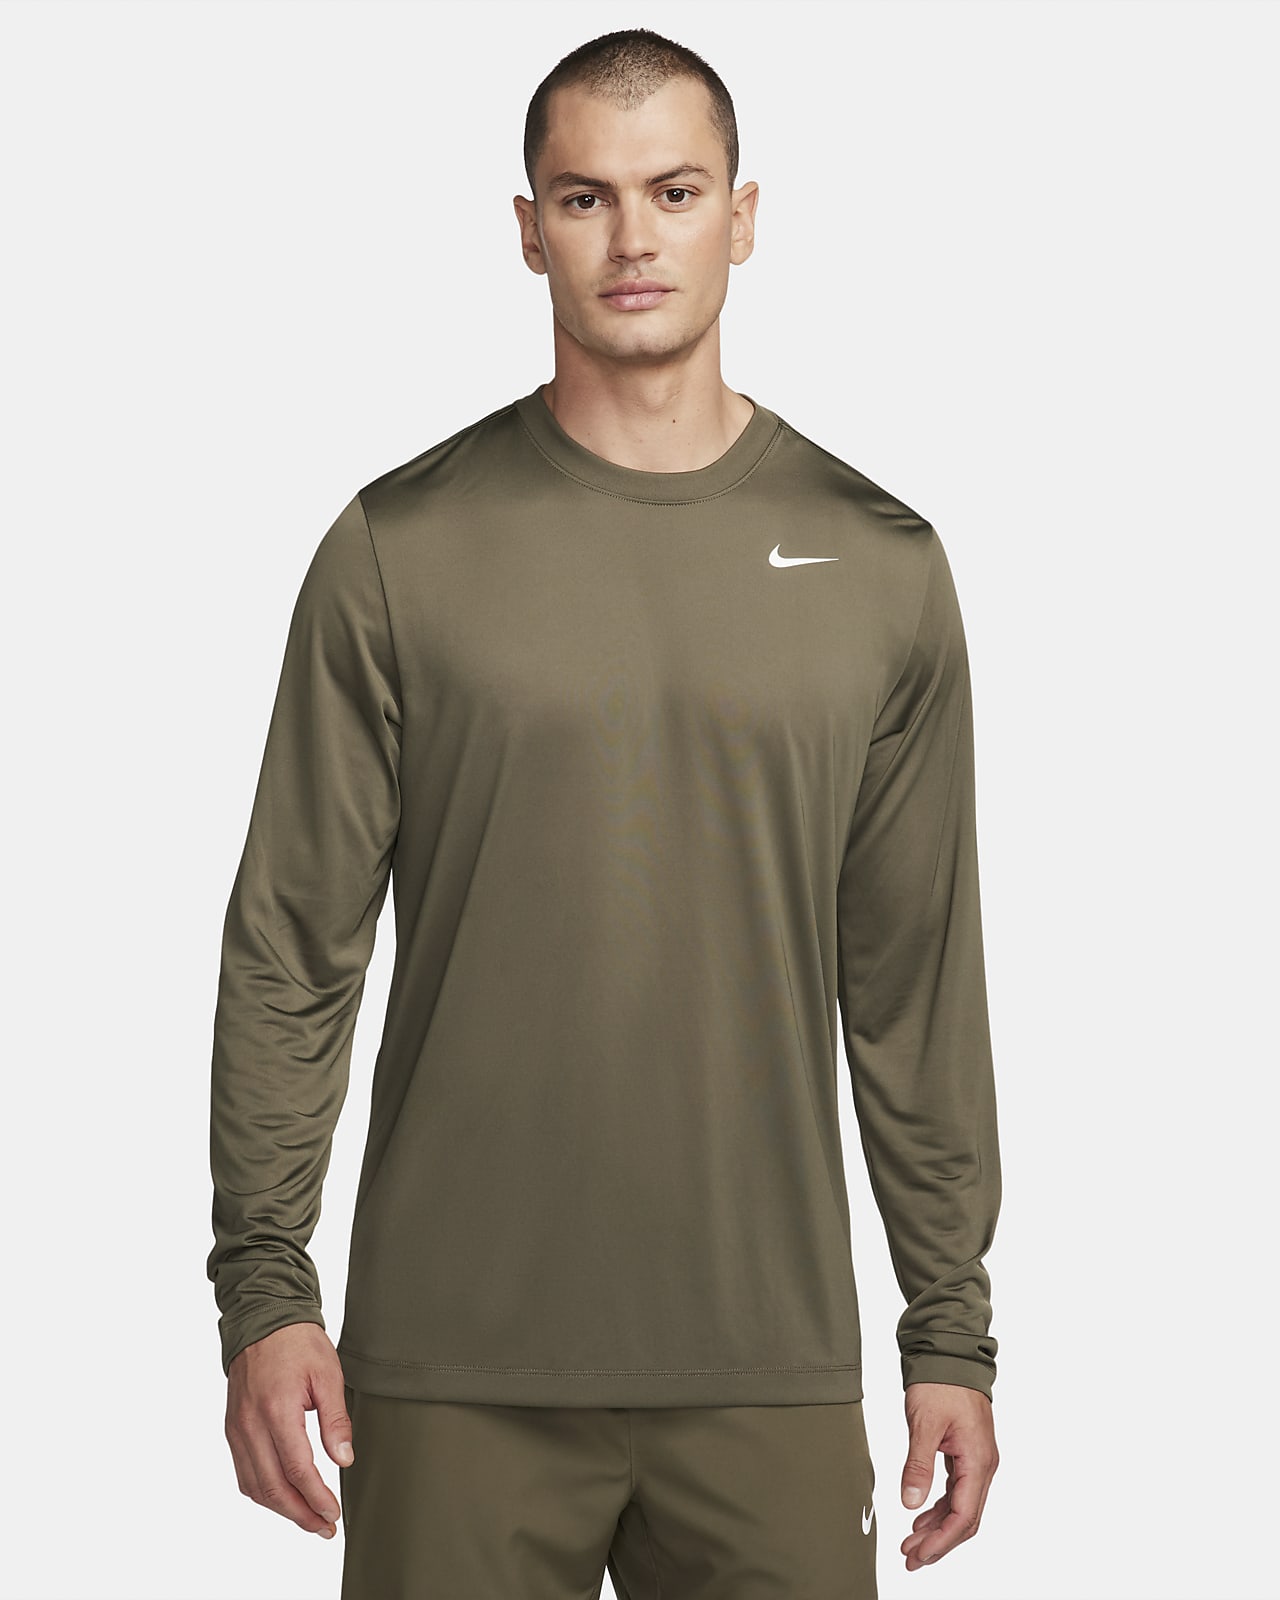 Nike Men's Dri-FIT Fleece Core Yoga Long Sleeve Shirt